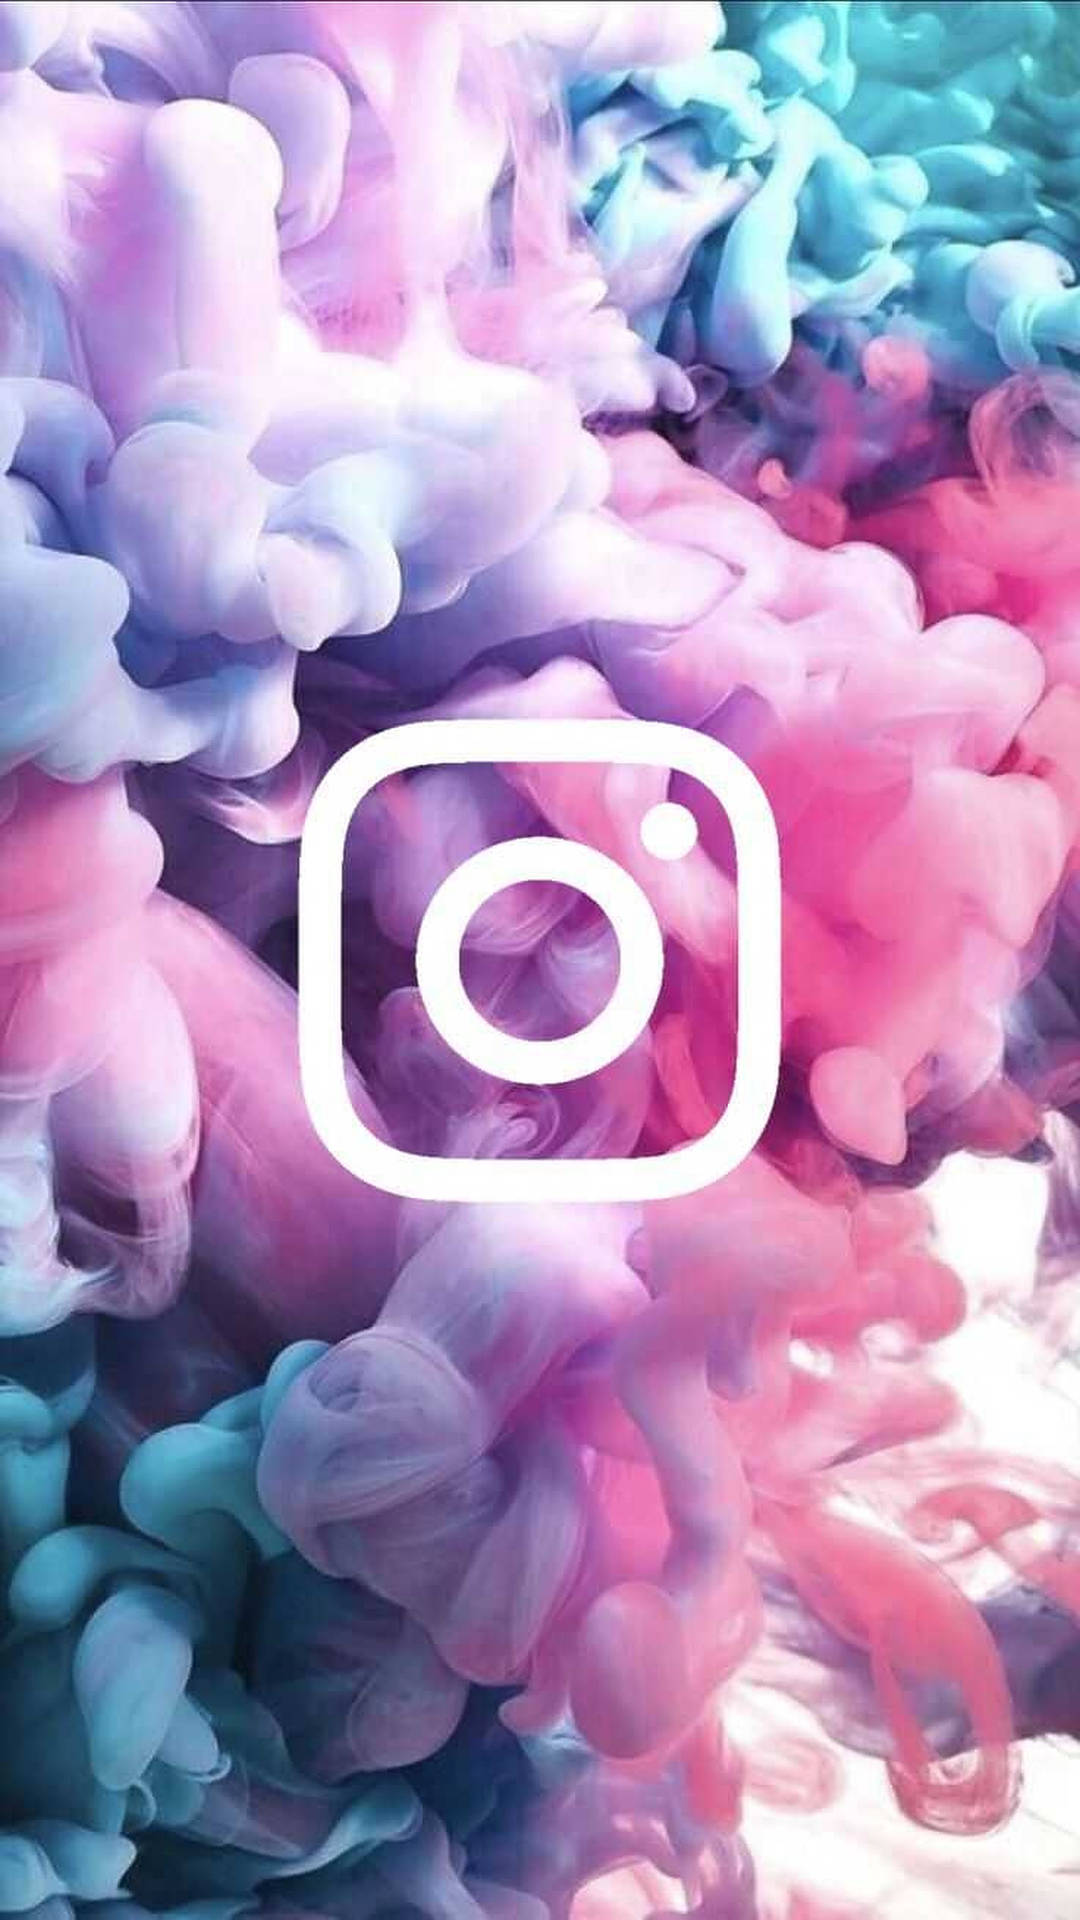 Free Instagram Wallpaper Downloads 100 Instagram Wallpapers for FREE   Wallpaperscom